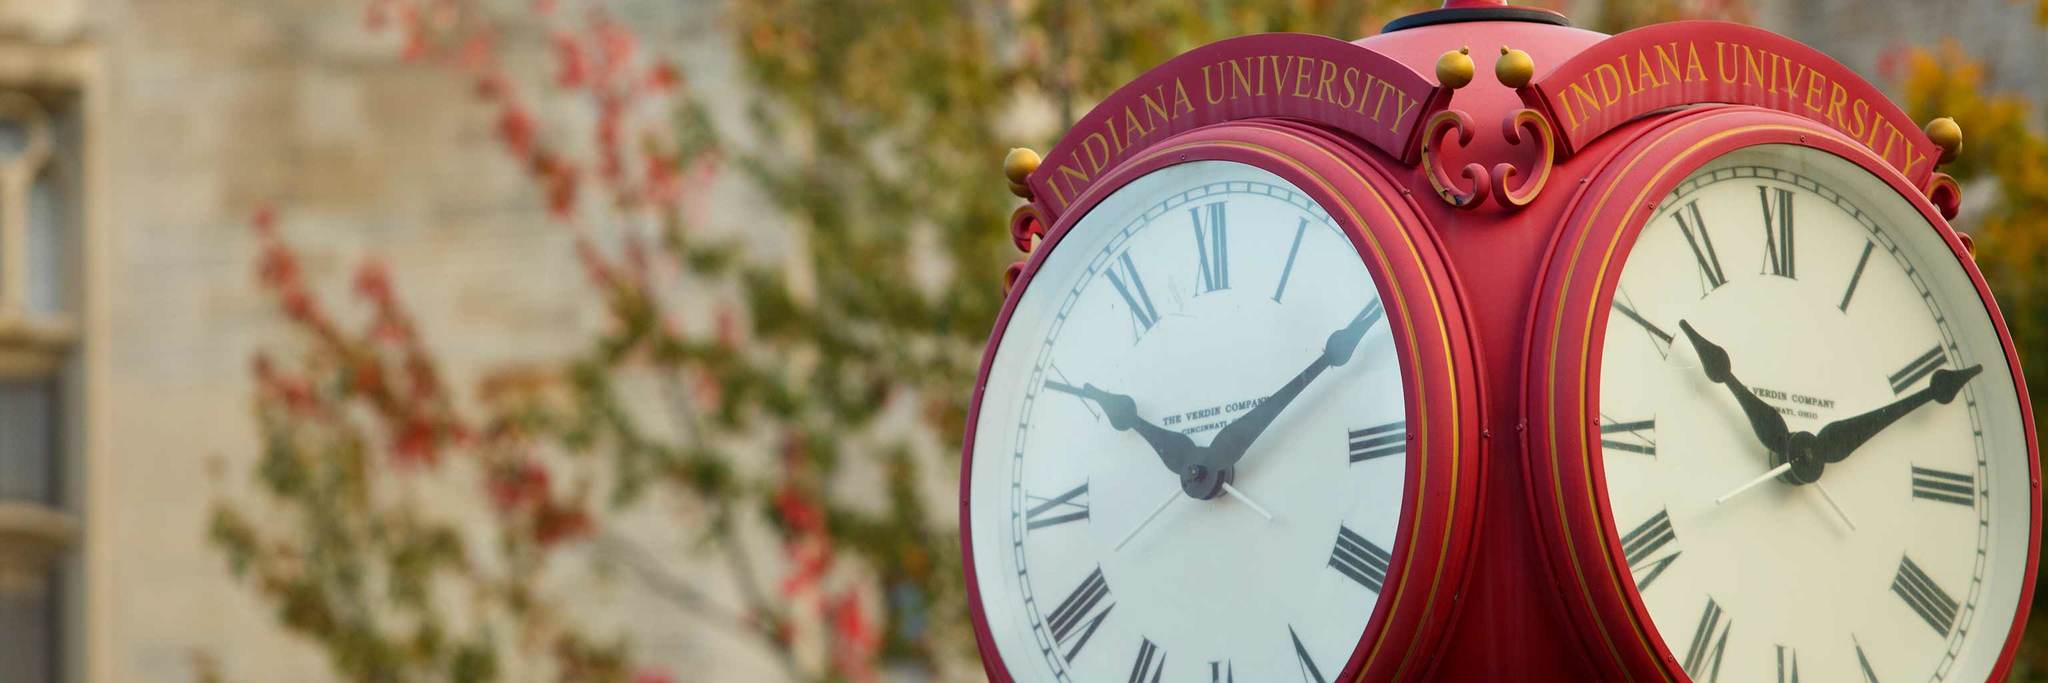 Indiana University clock